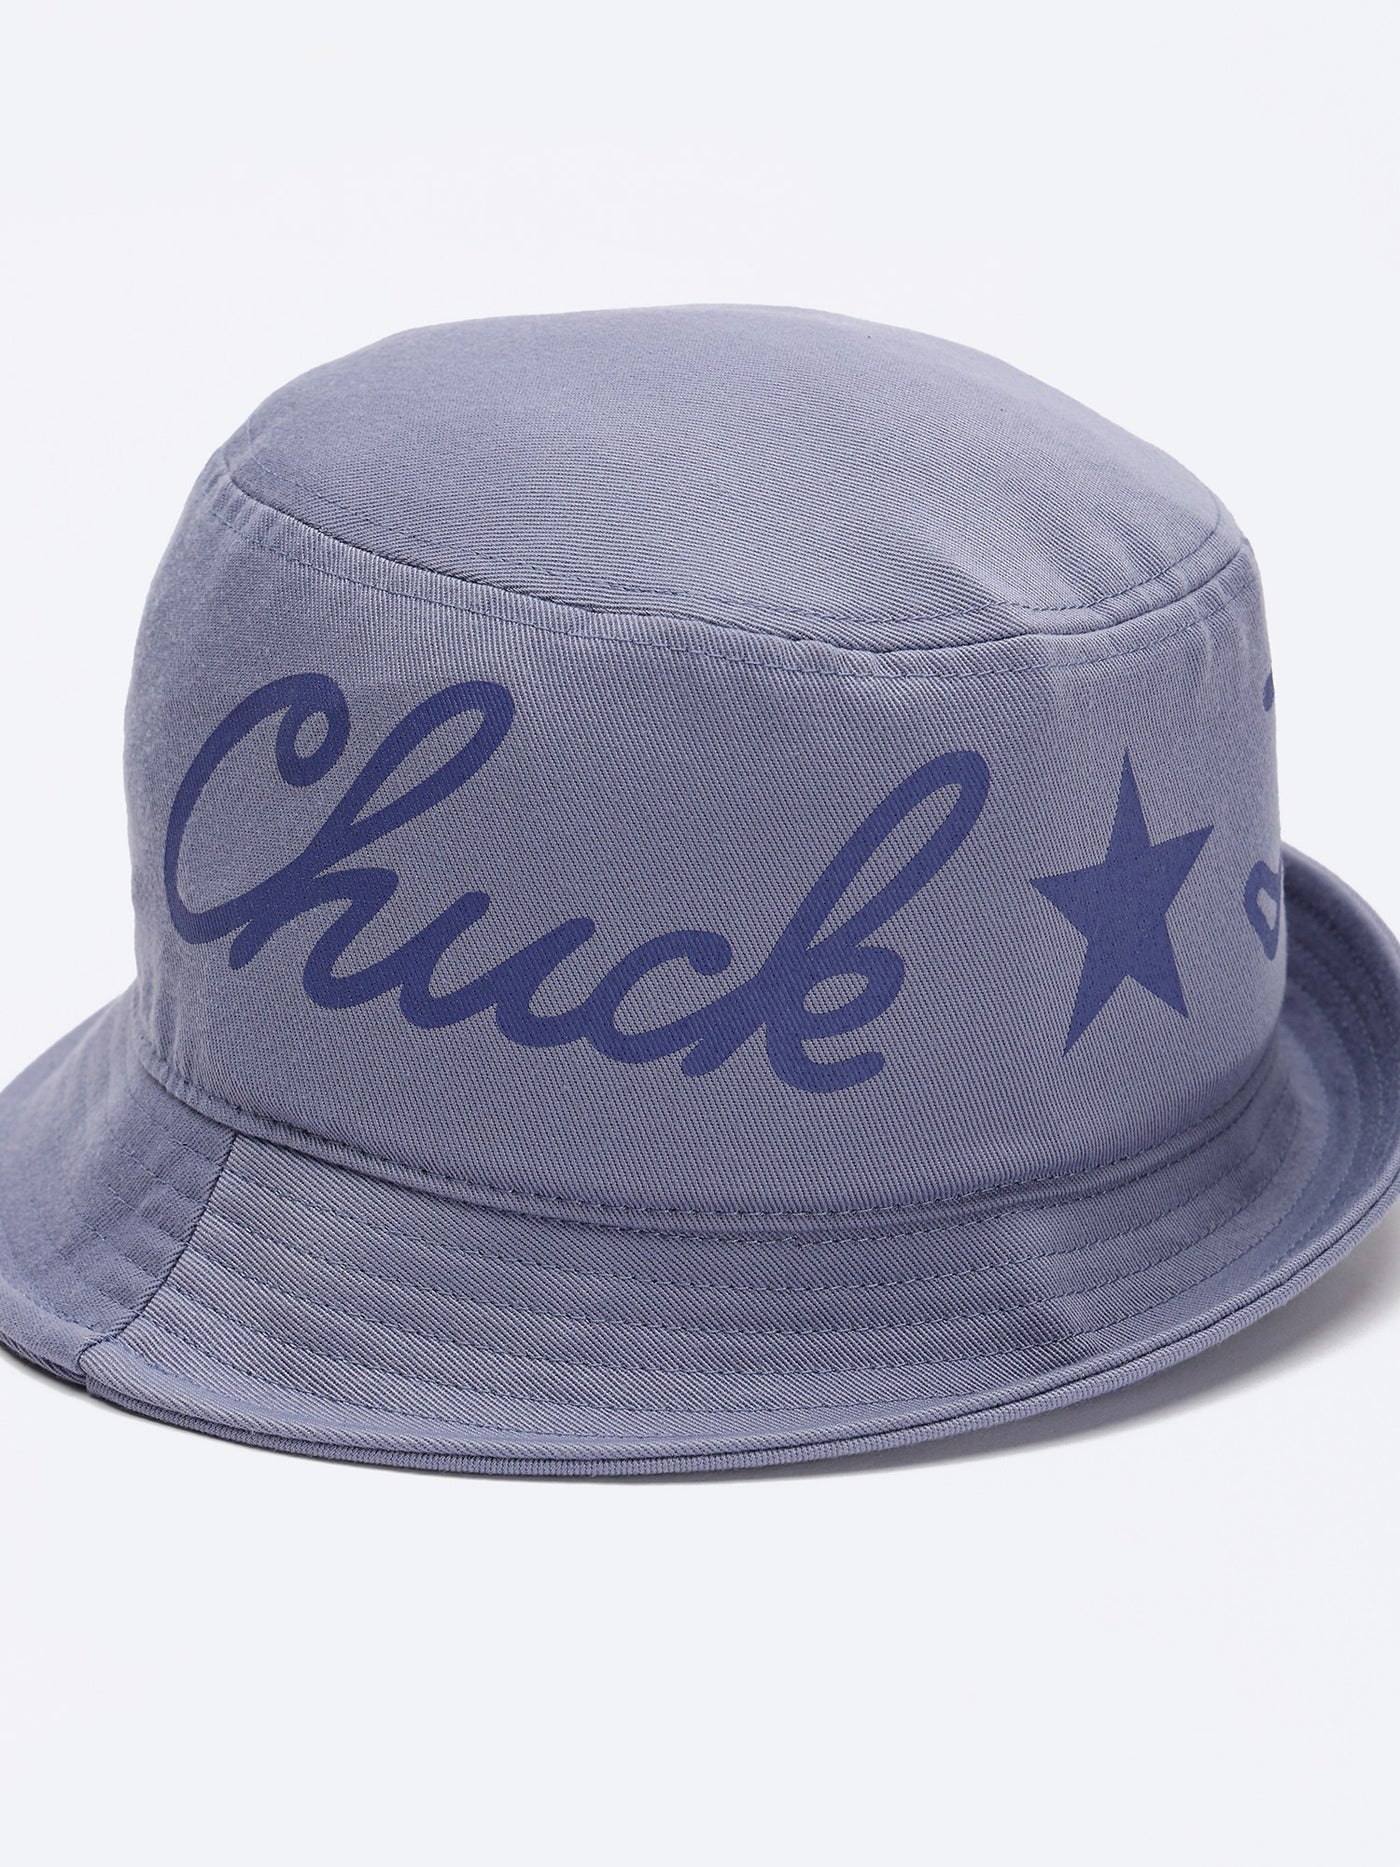 Unisex Hat - "Chuck Taylor" Printed